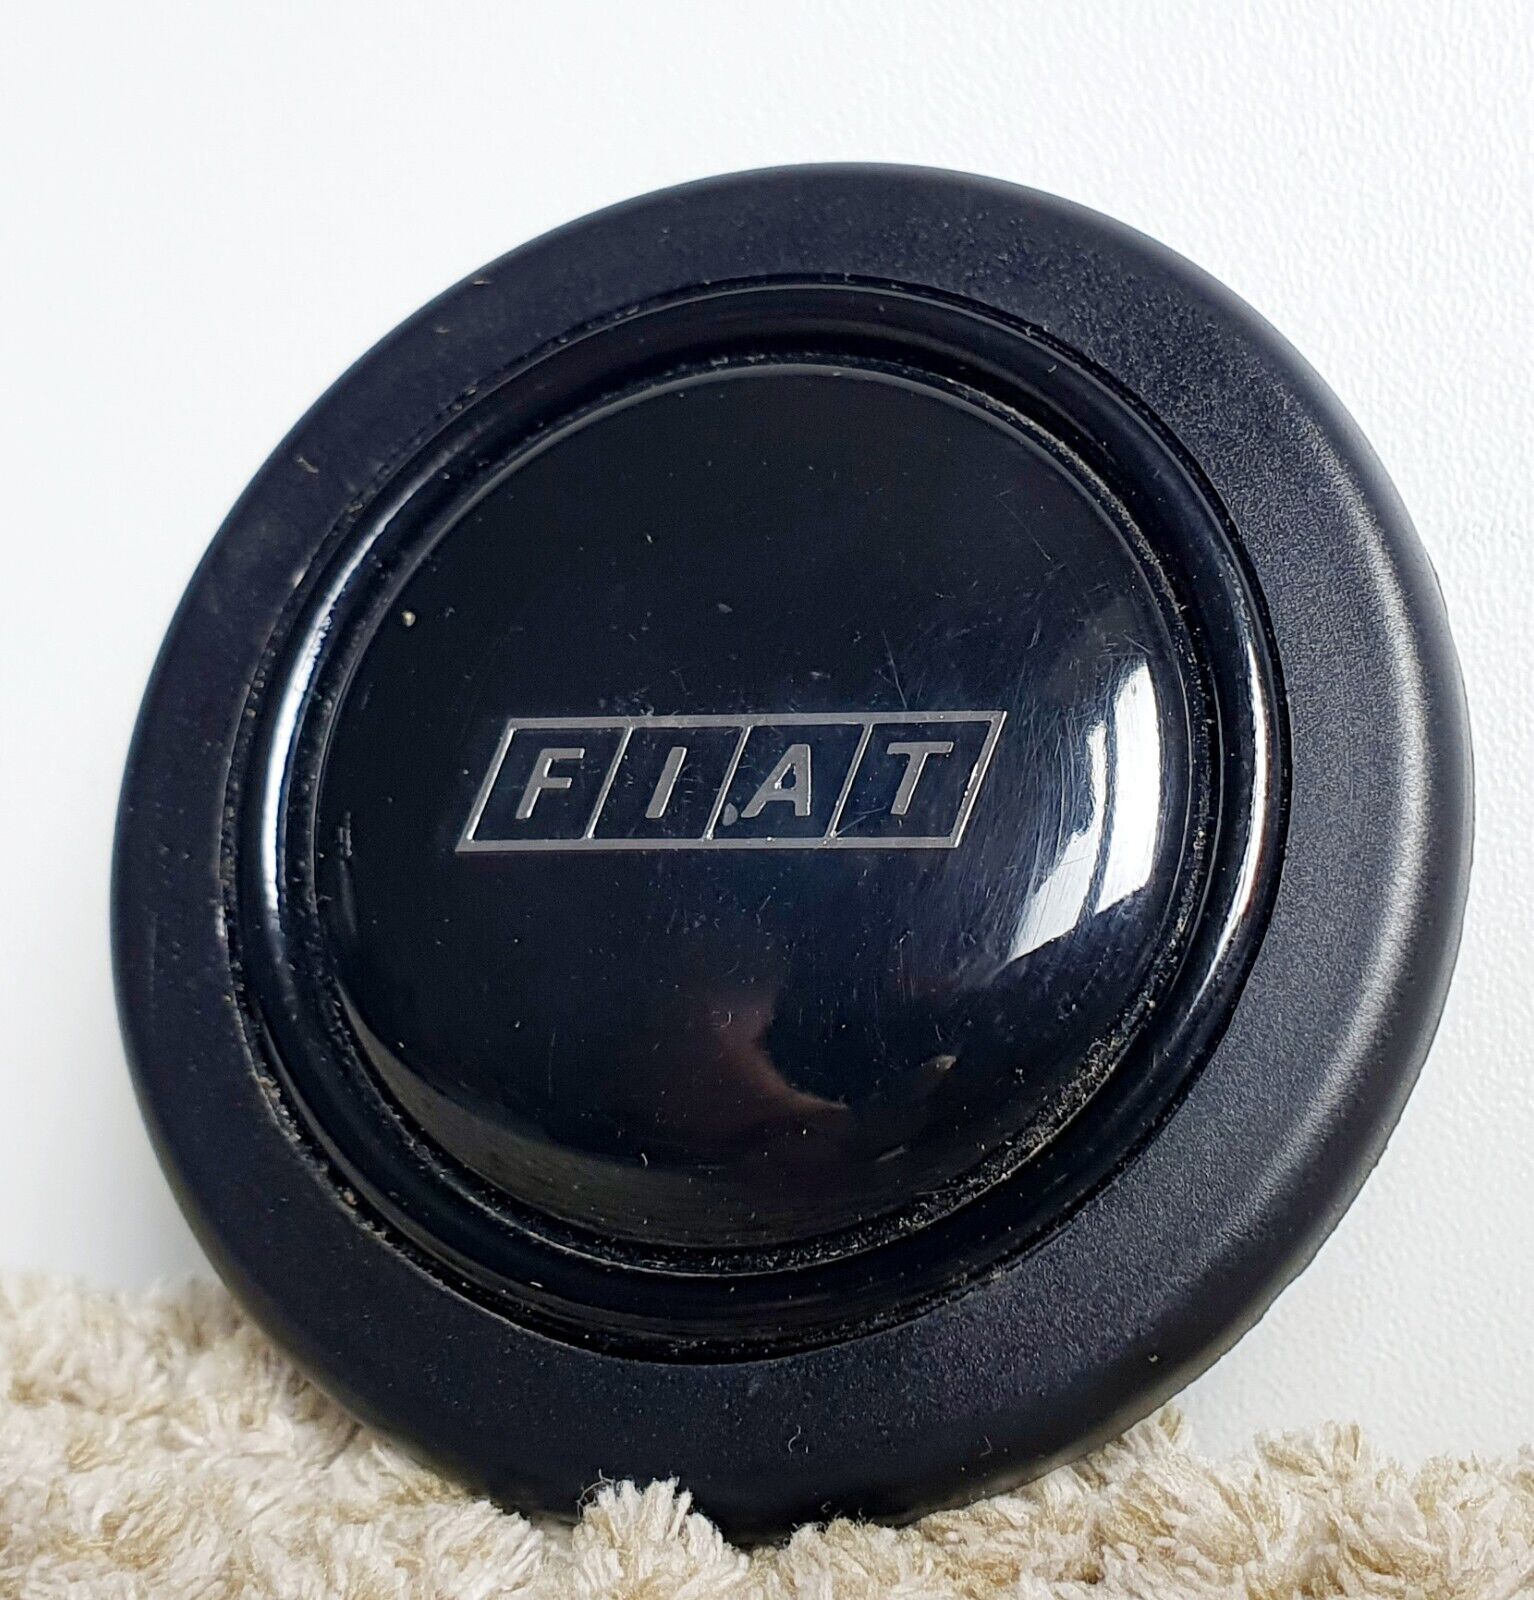 MOMO Authentic horn button pulsante for MOMO steering wheel Fiat 500 Punto Uno